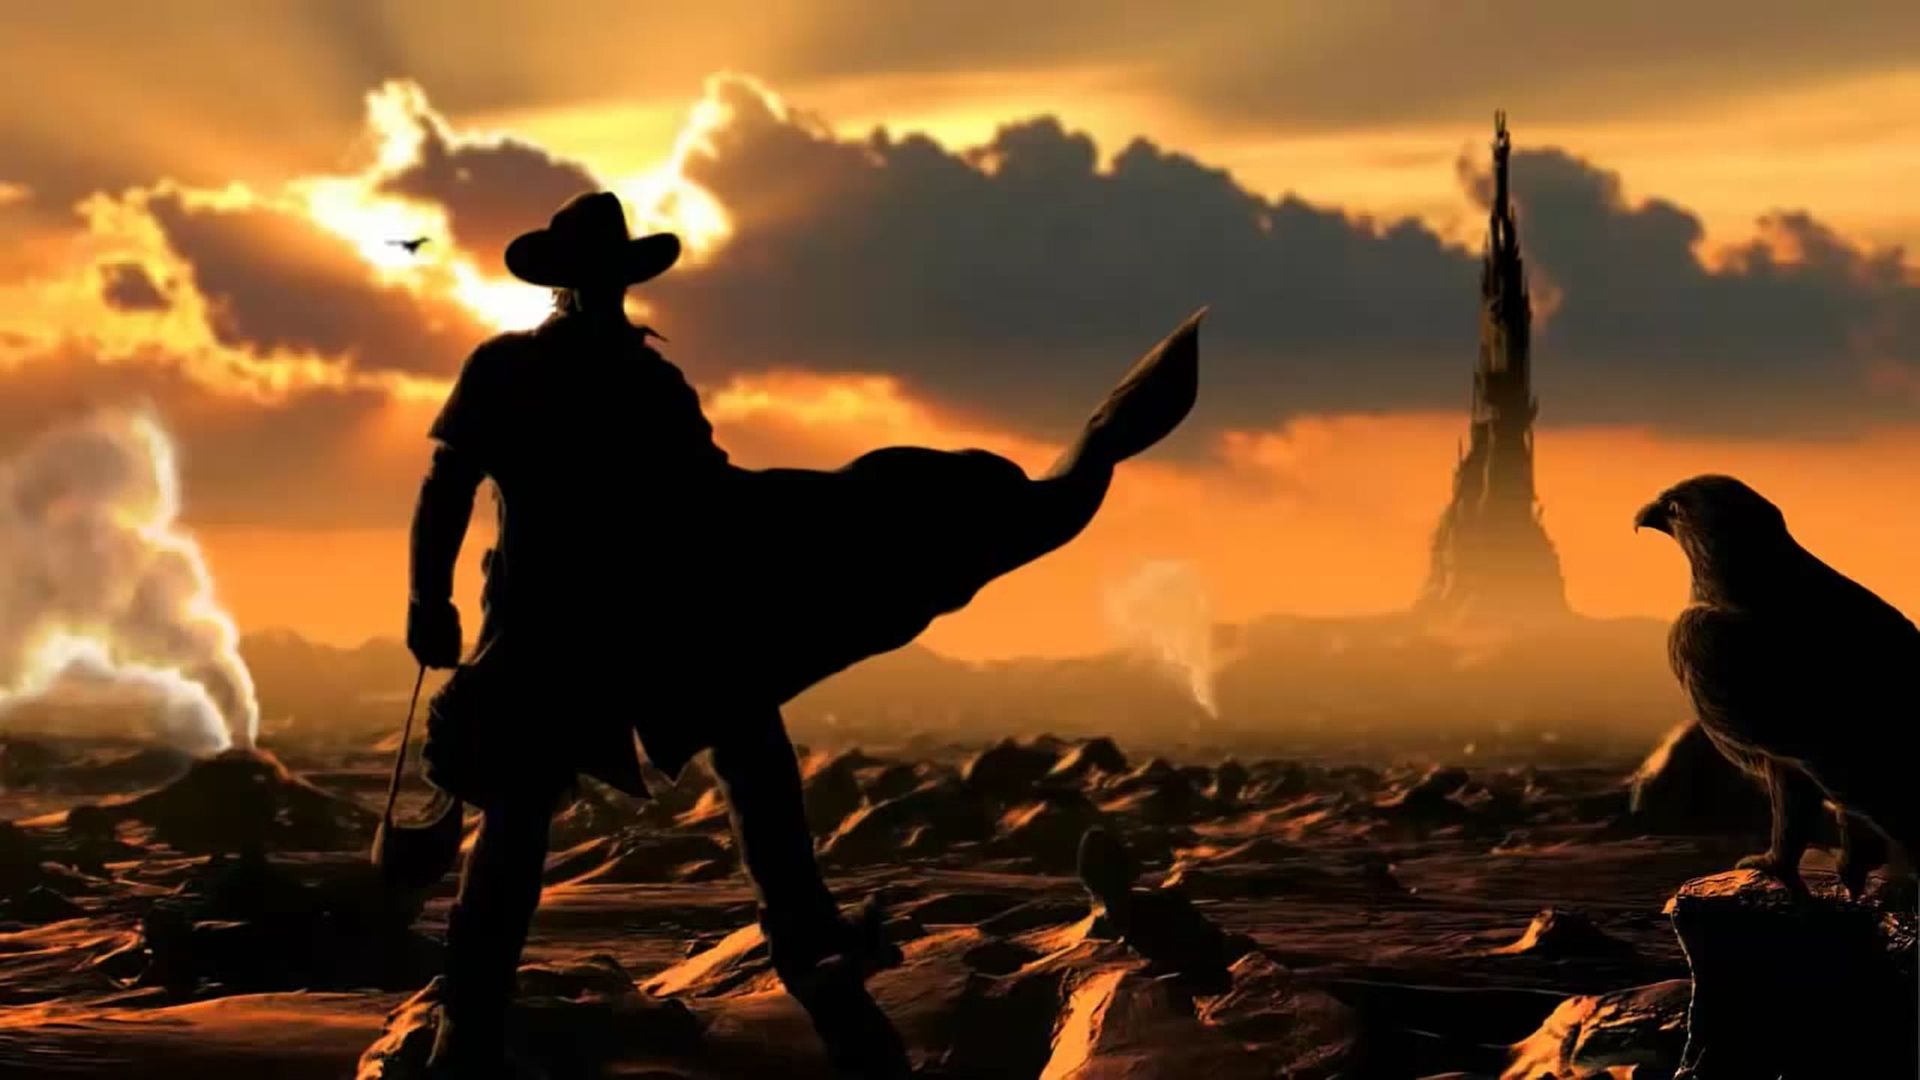 Epic Western Music - The Lone Wanderer (서부, 장엄, 경쾌, 웅장)